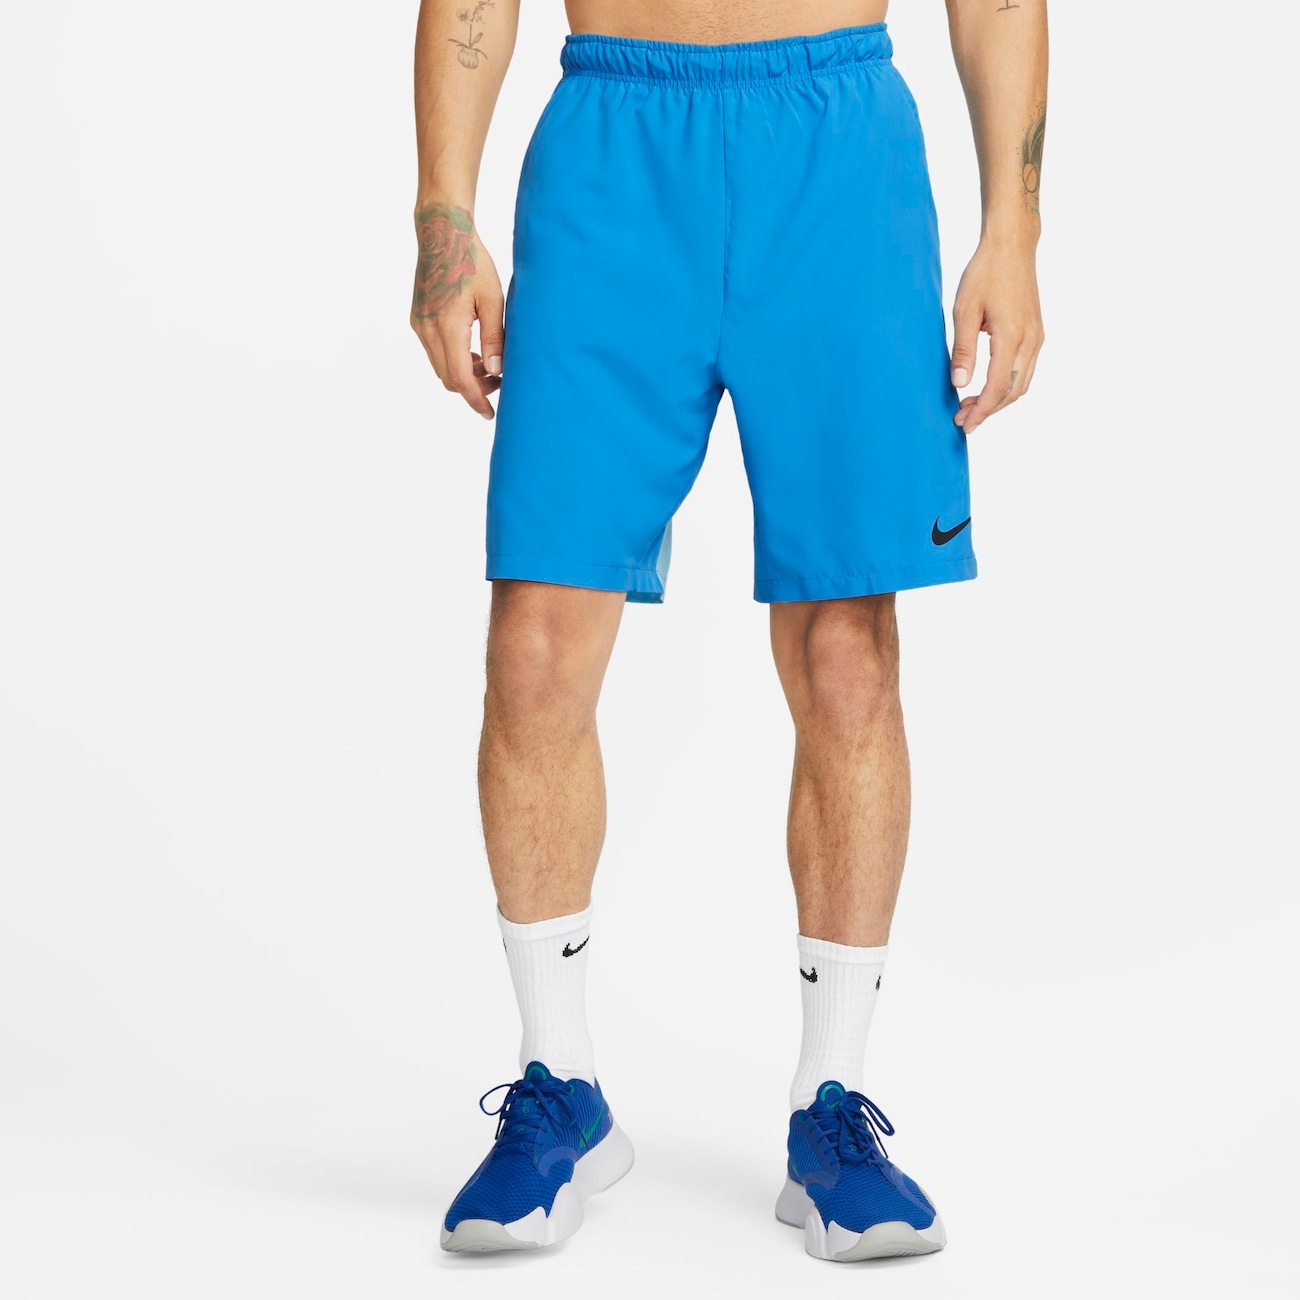 Shorts Nike Woven Masculino